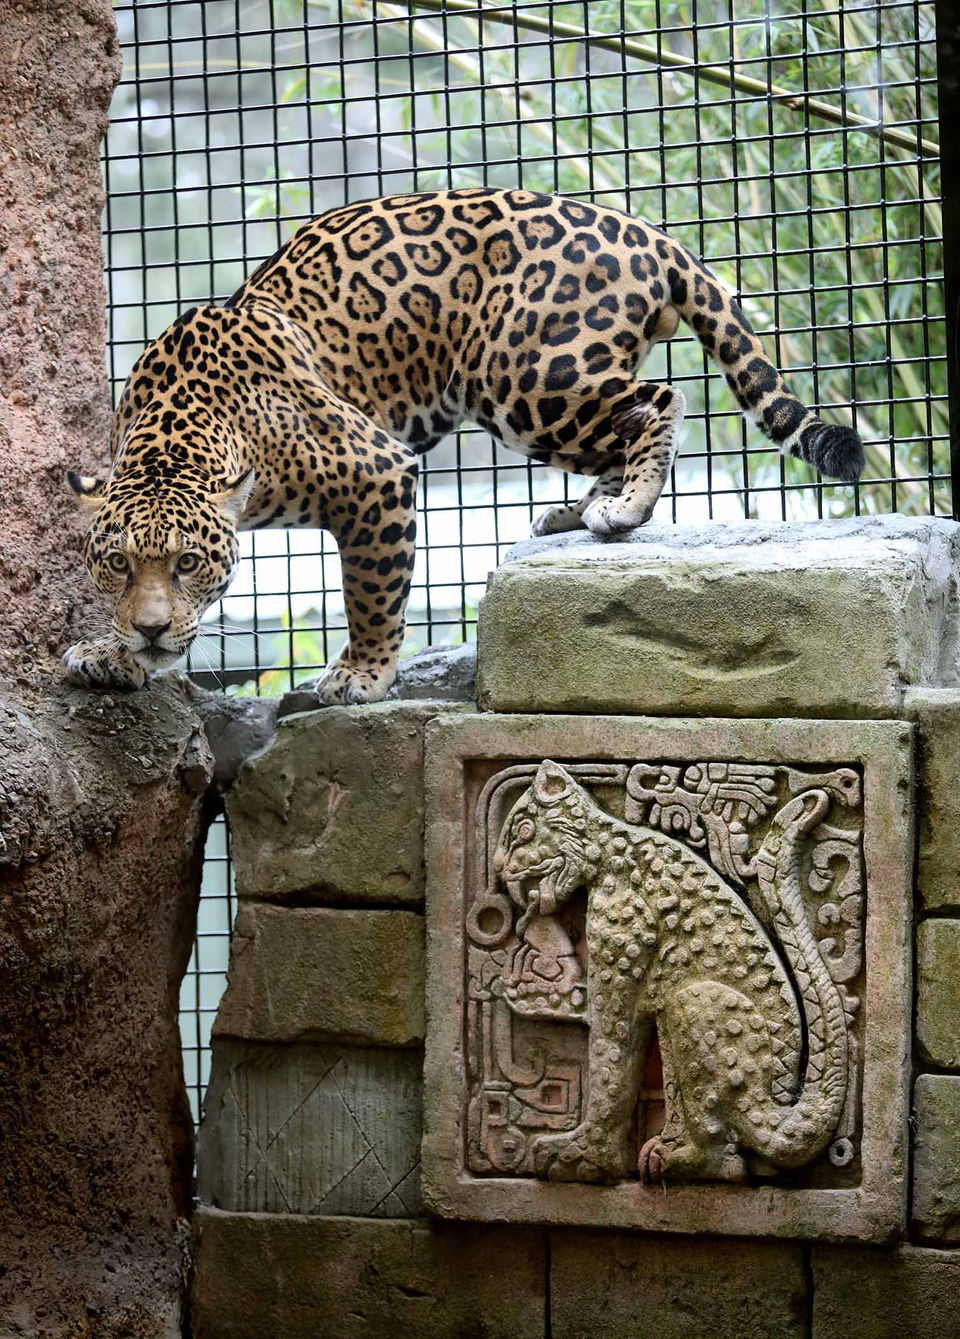 See Valerio the jaguar explore his renovated enclosure at Audubon